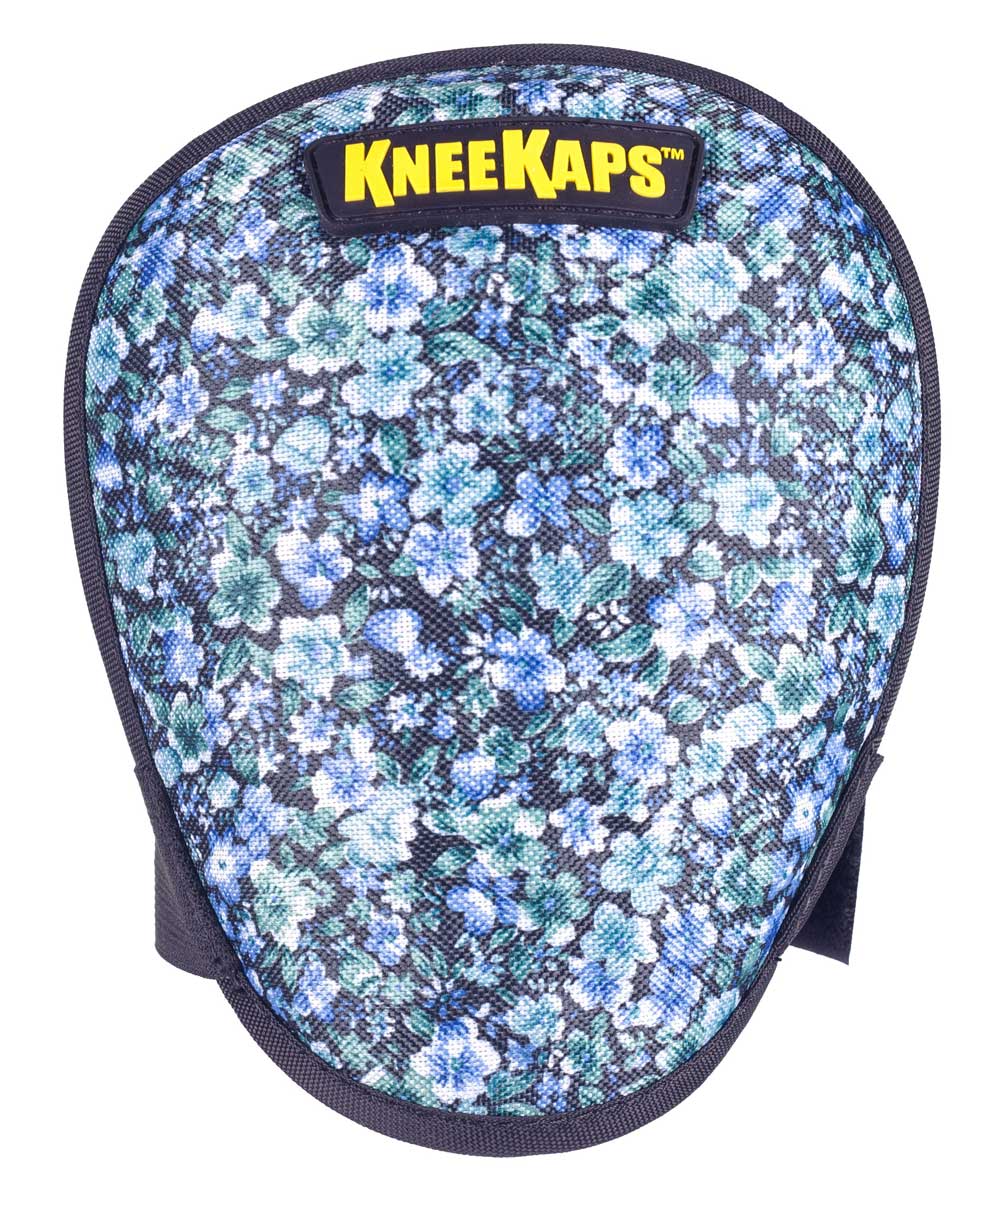 ALTA KneeKap Knee Pads for Home and Garden